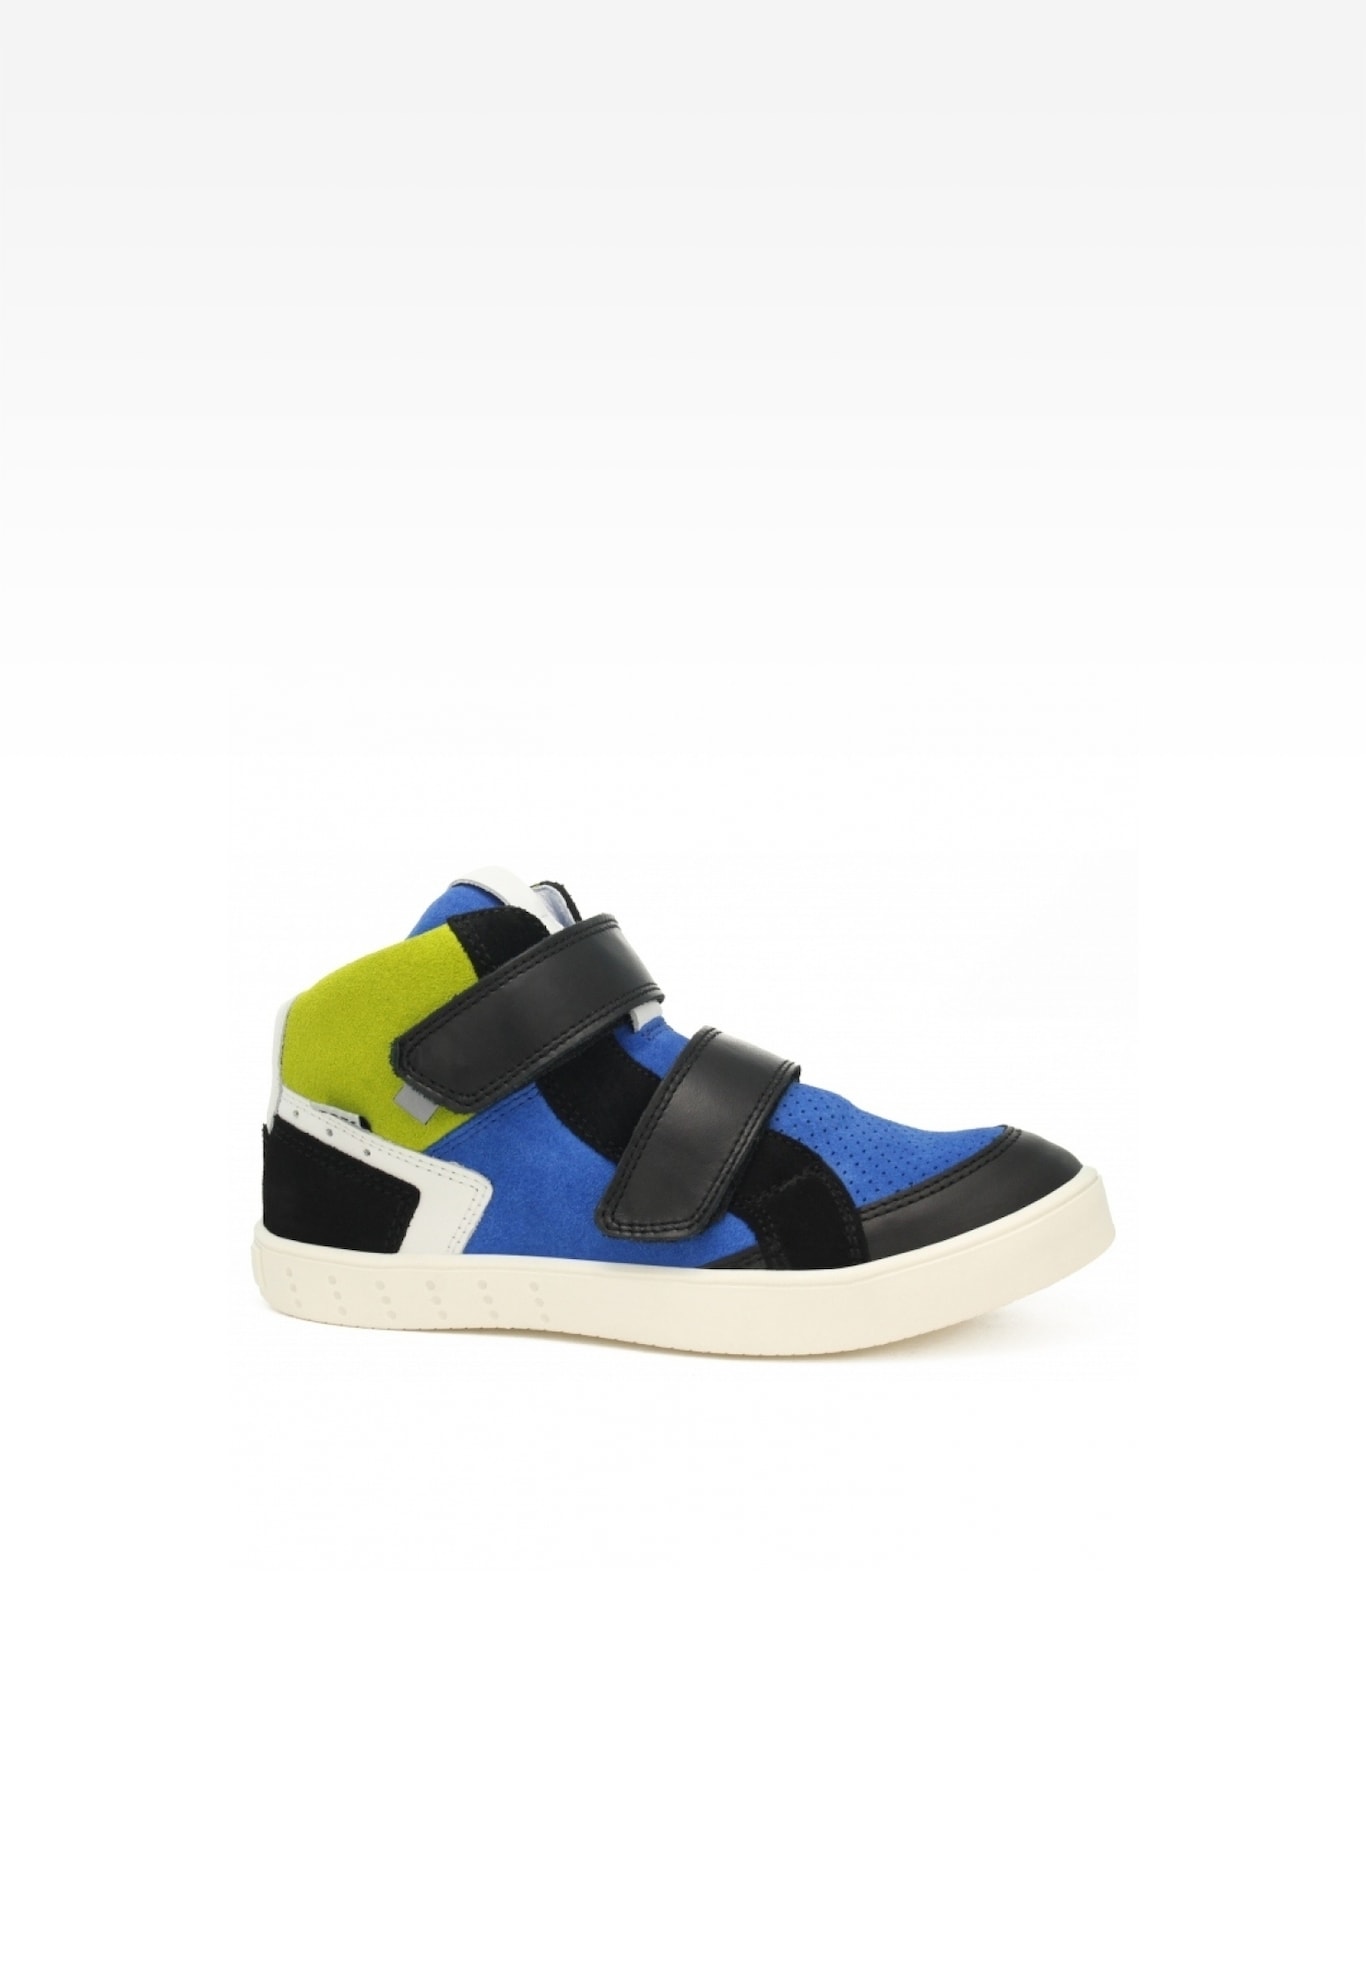 Sneakers BARTEK 024414-025 II, niebiesko-czarny